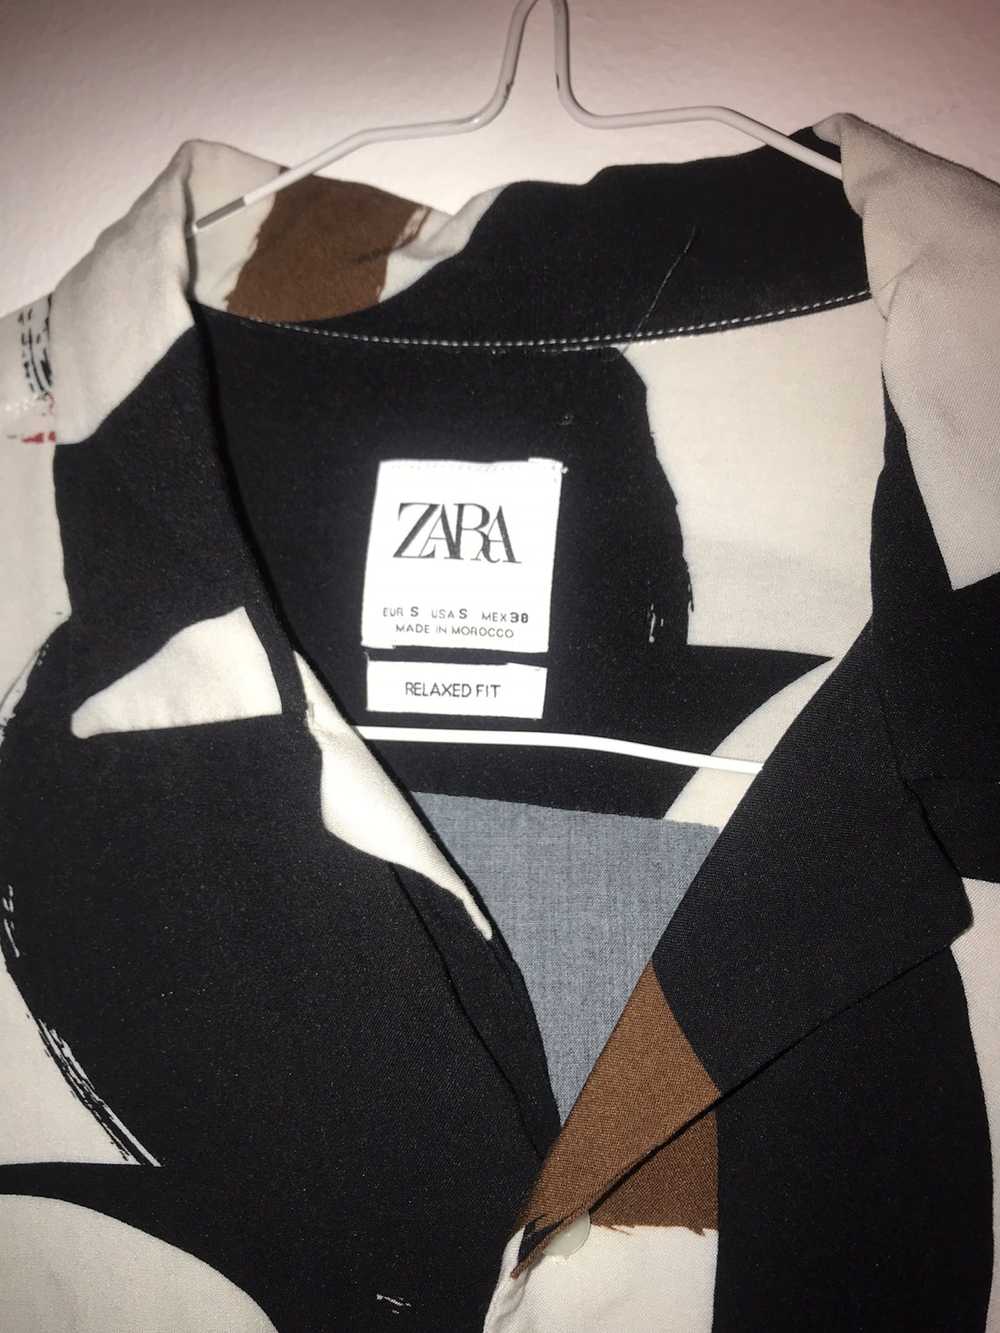 Zara Zara Relaxed Fit Patterned Short-Sleeve Shirt - image 2